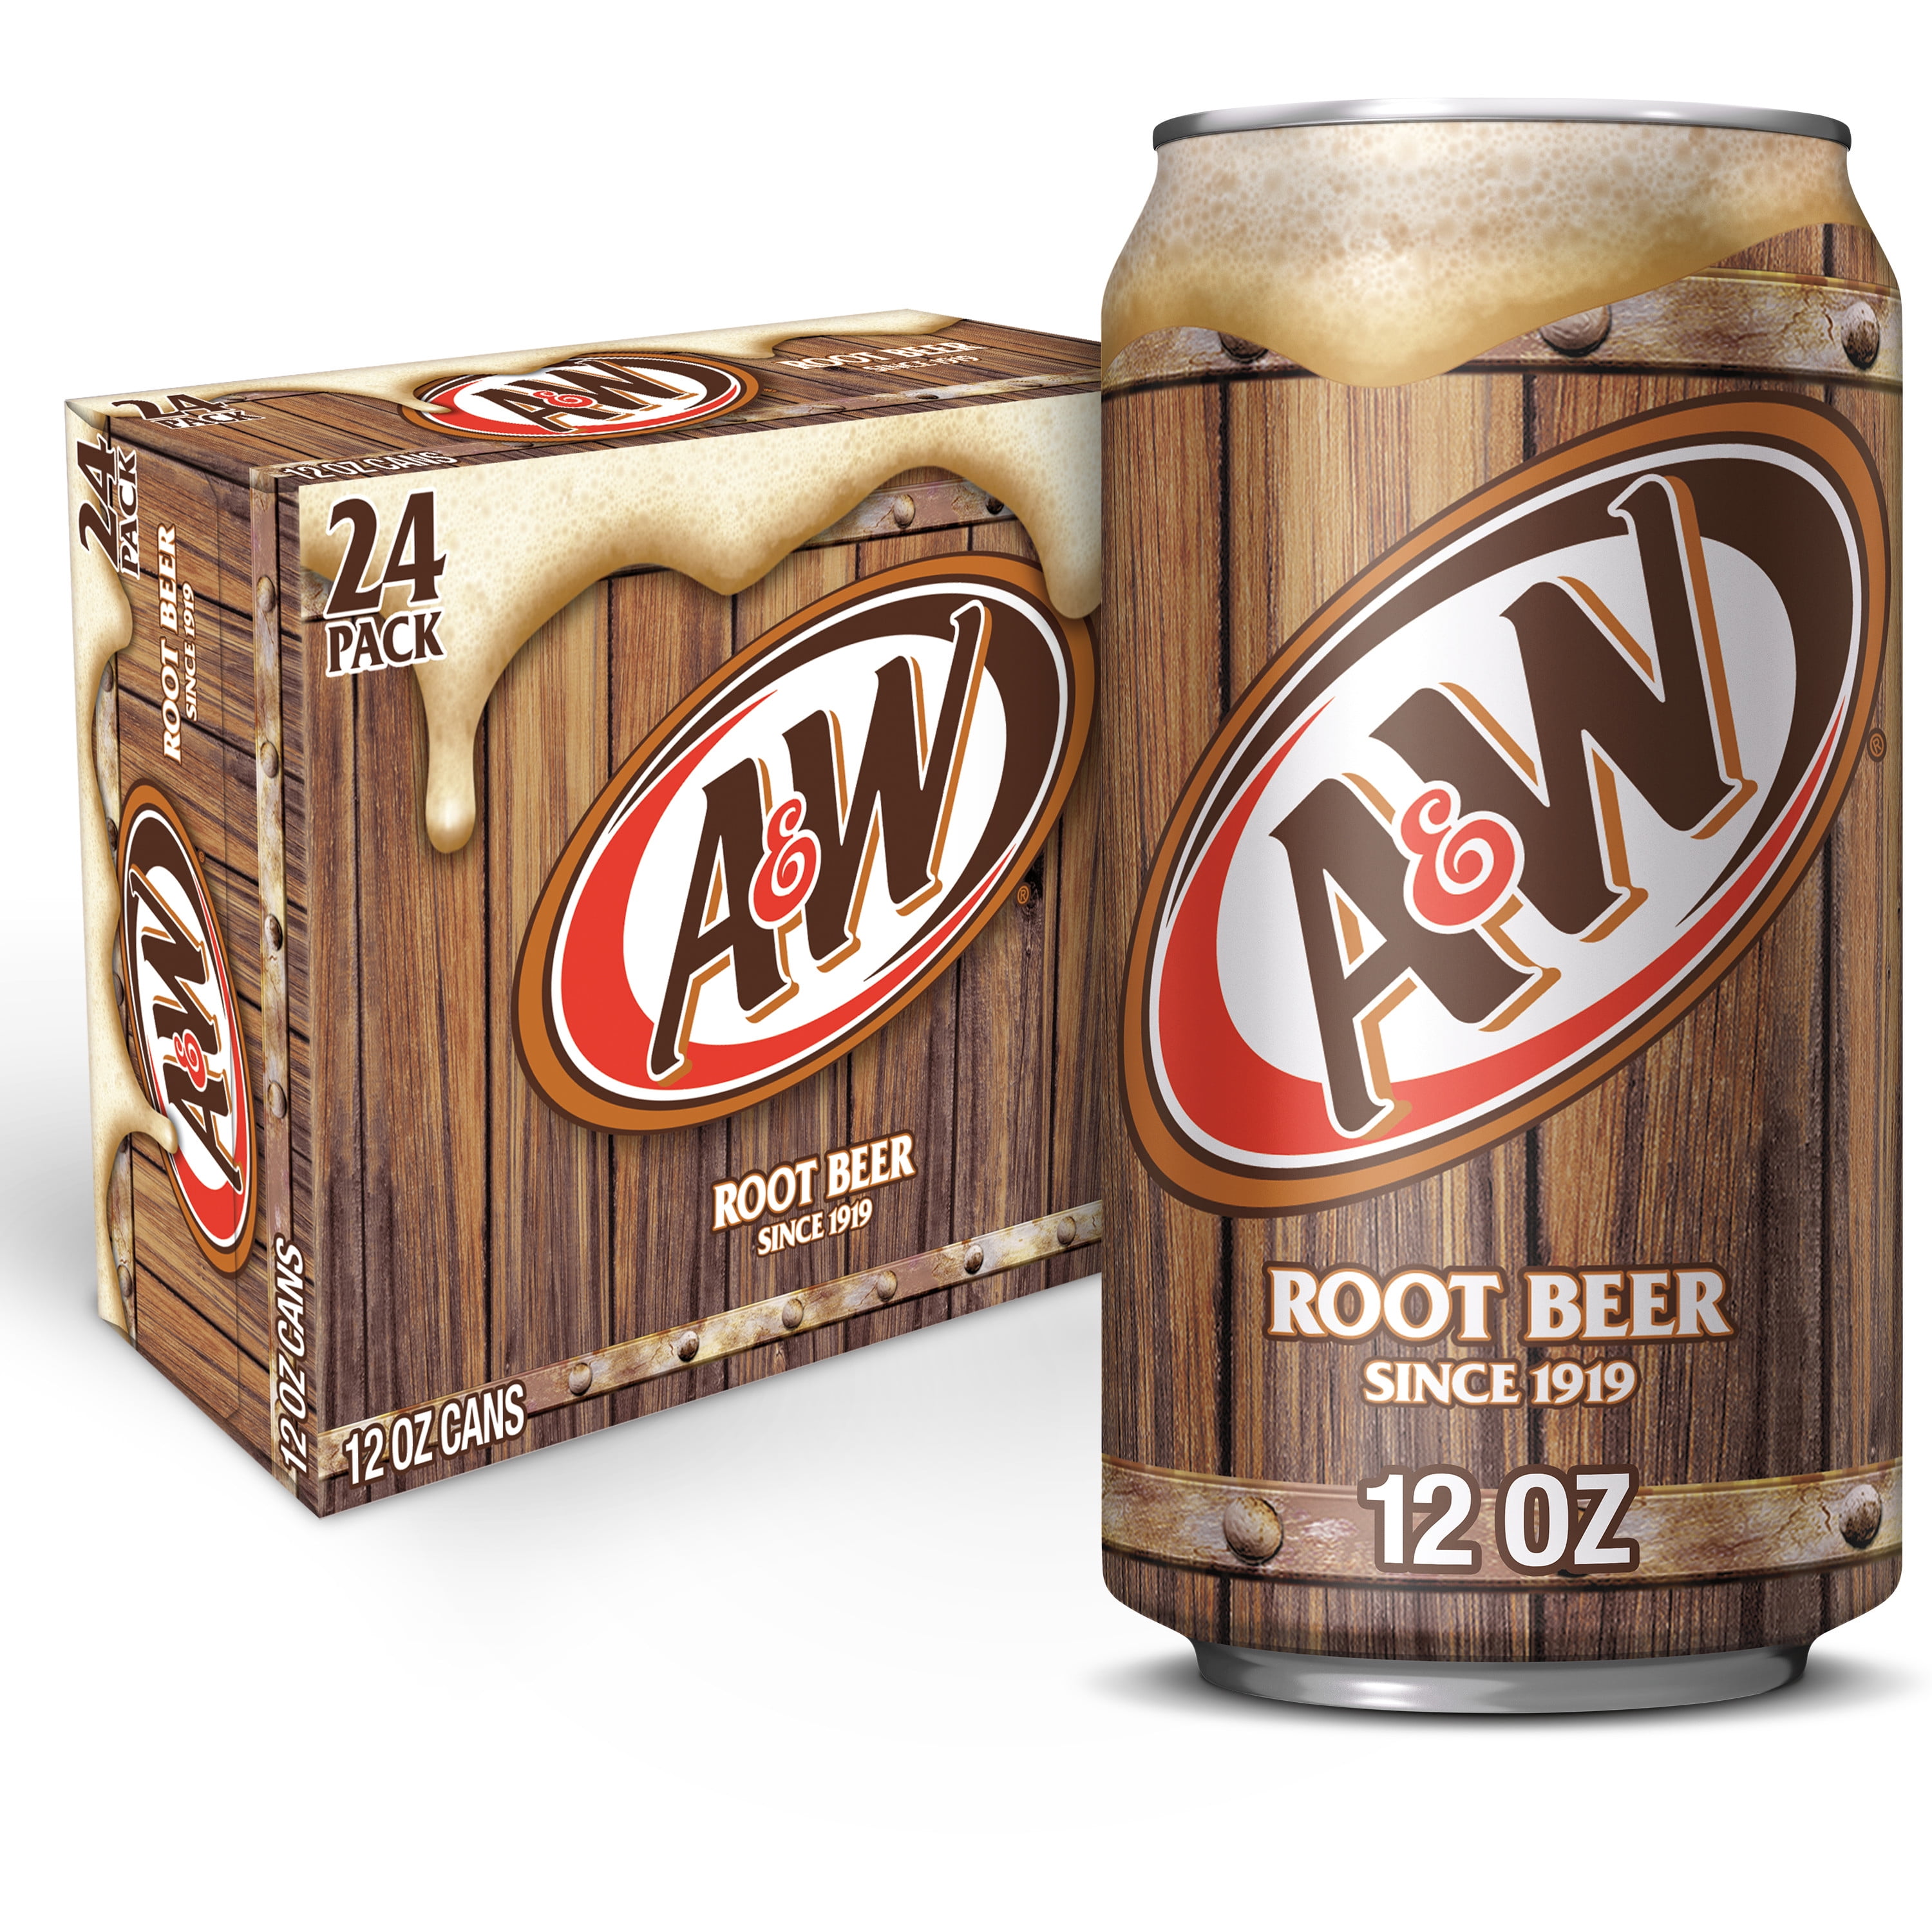 A&W Caffeine-Free, Low Sodium Root Beer Soda Pop, 12 Fl Oz, 24 Pack...